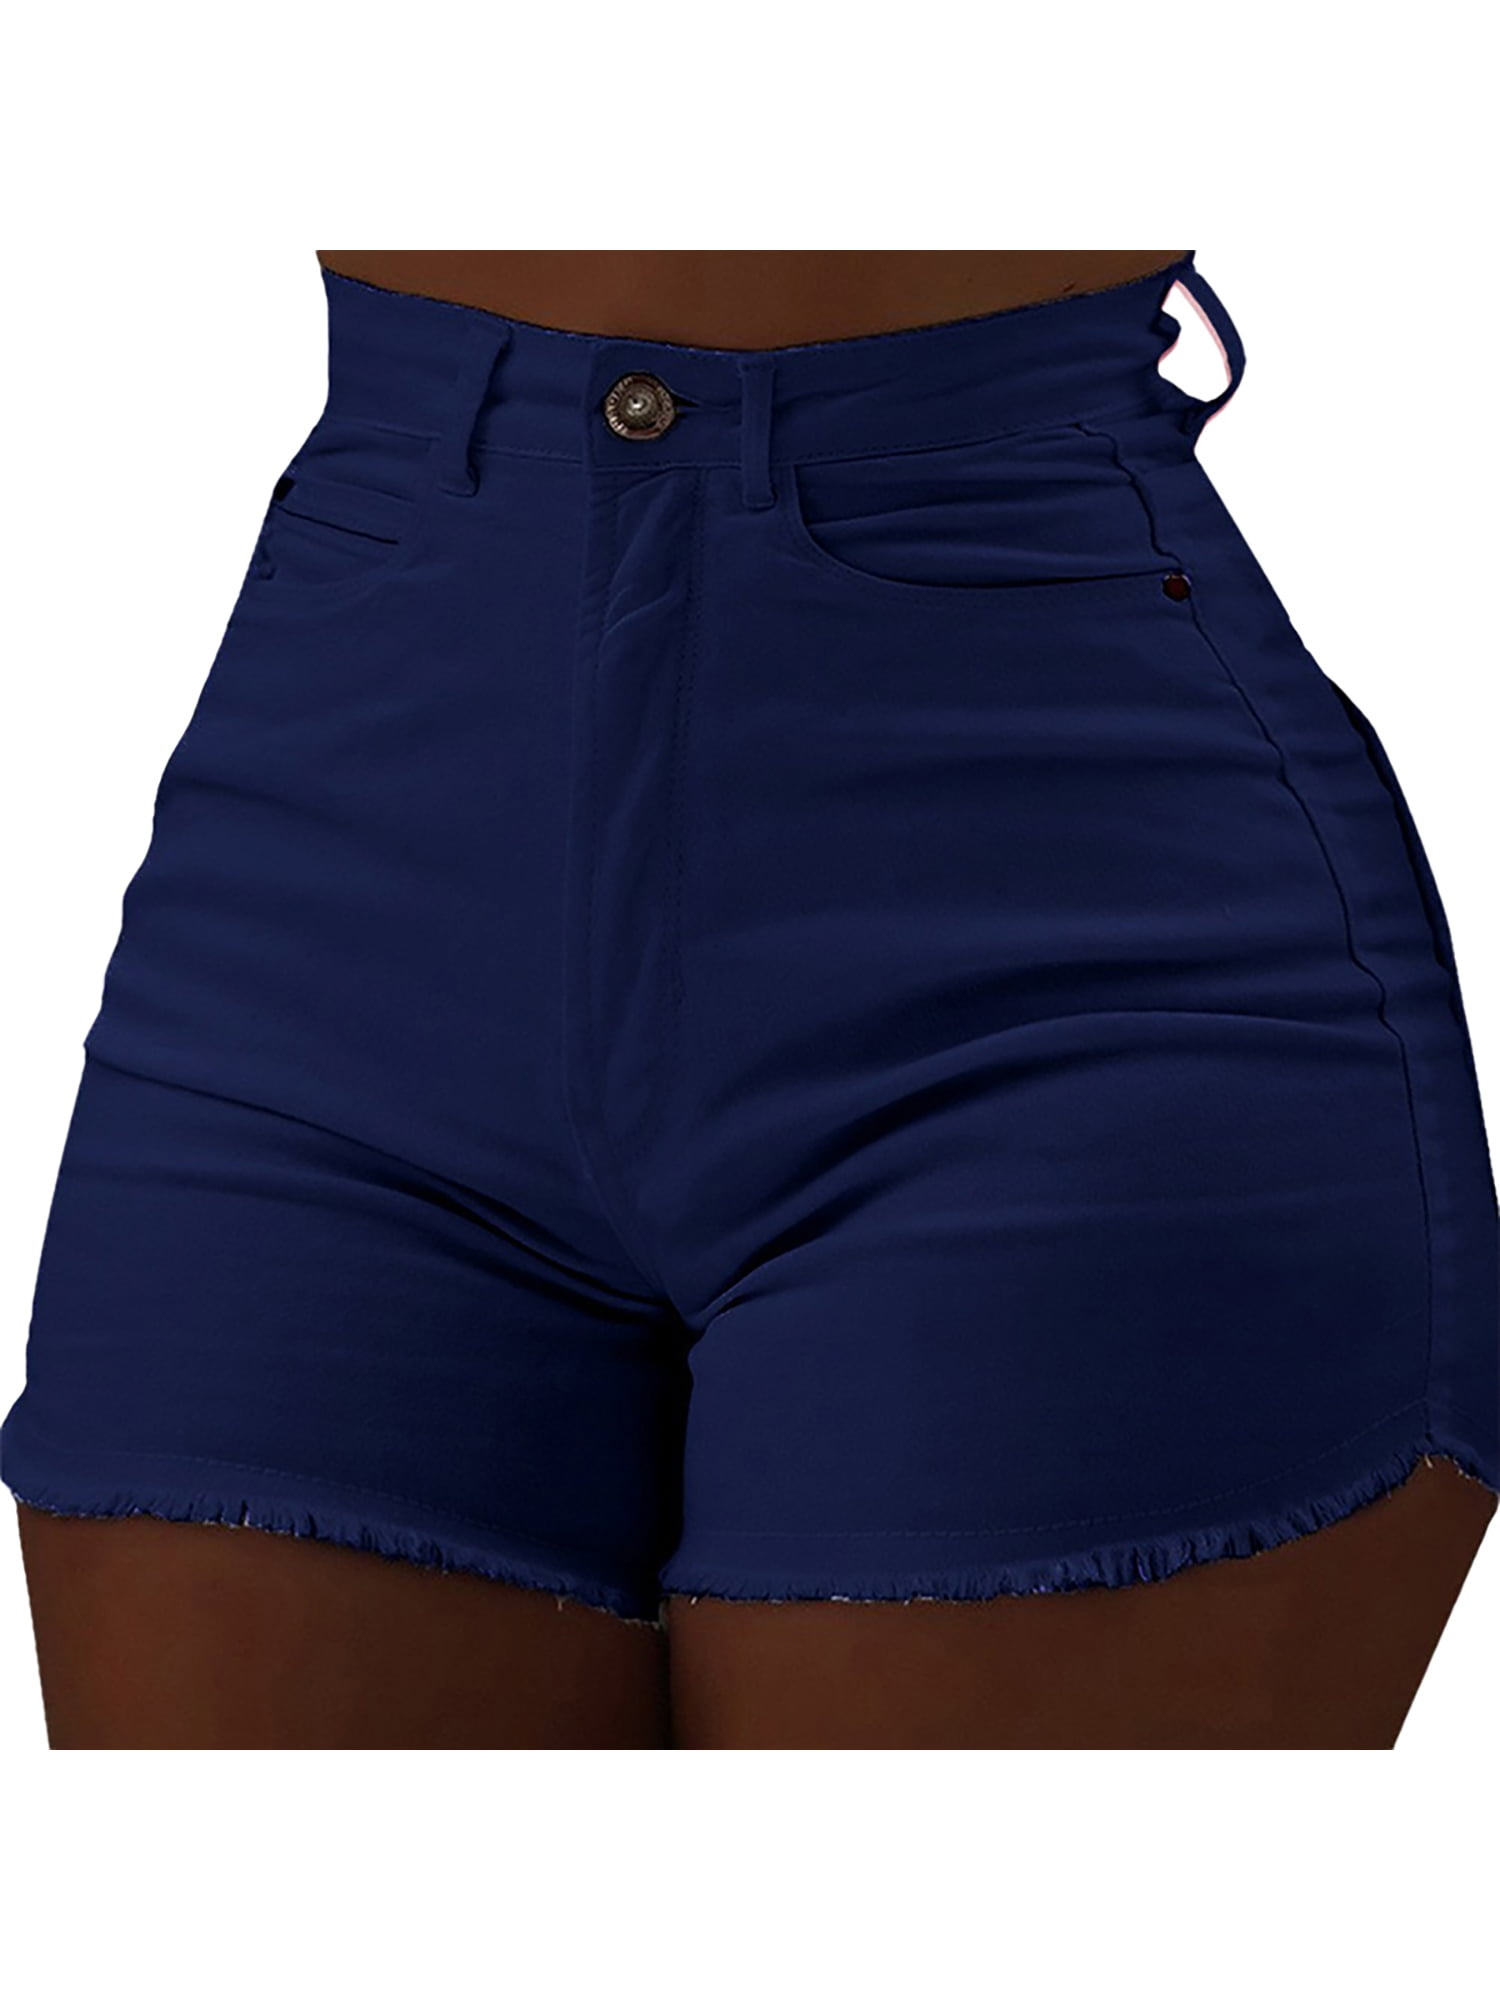 Women Ladies High Waisted Vintage Button Pockets Denim Summer Hot Pants Shorts